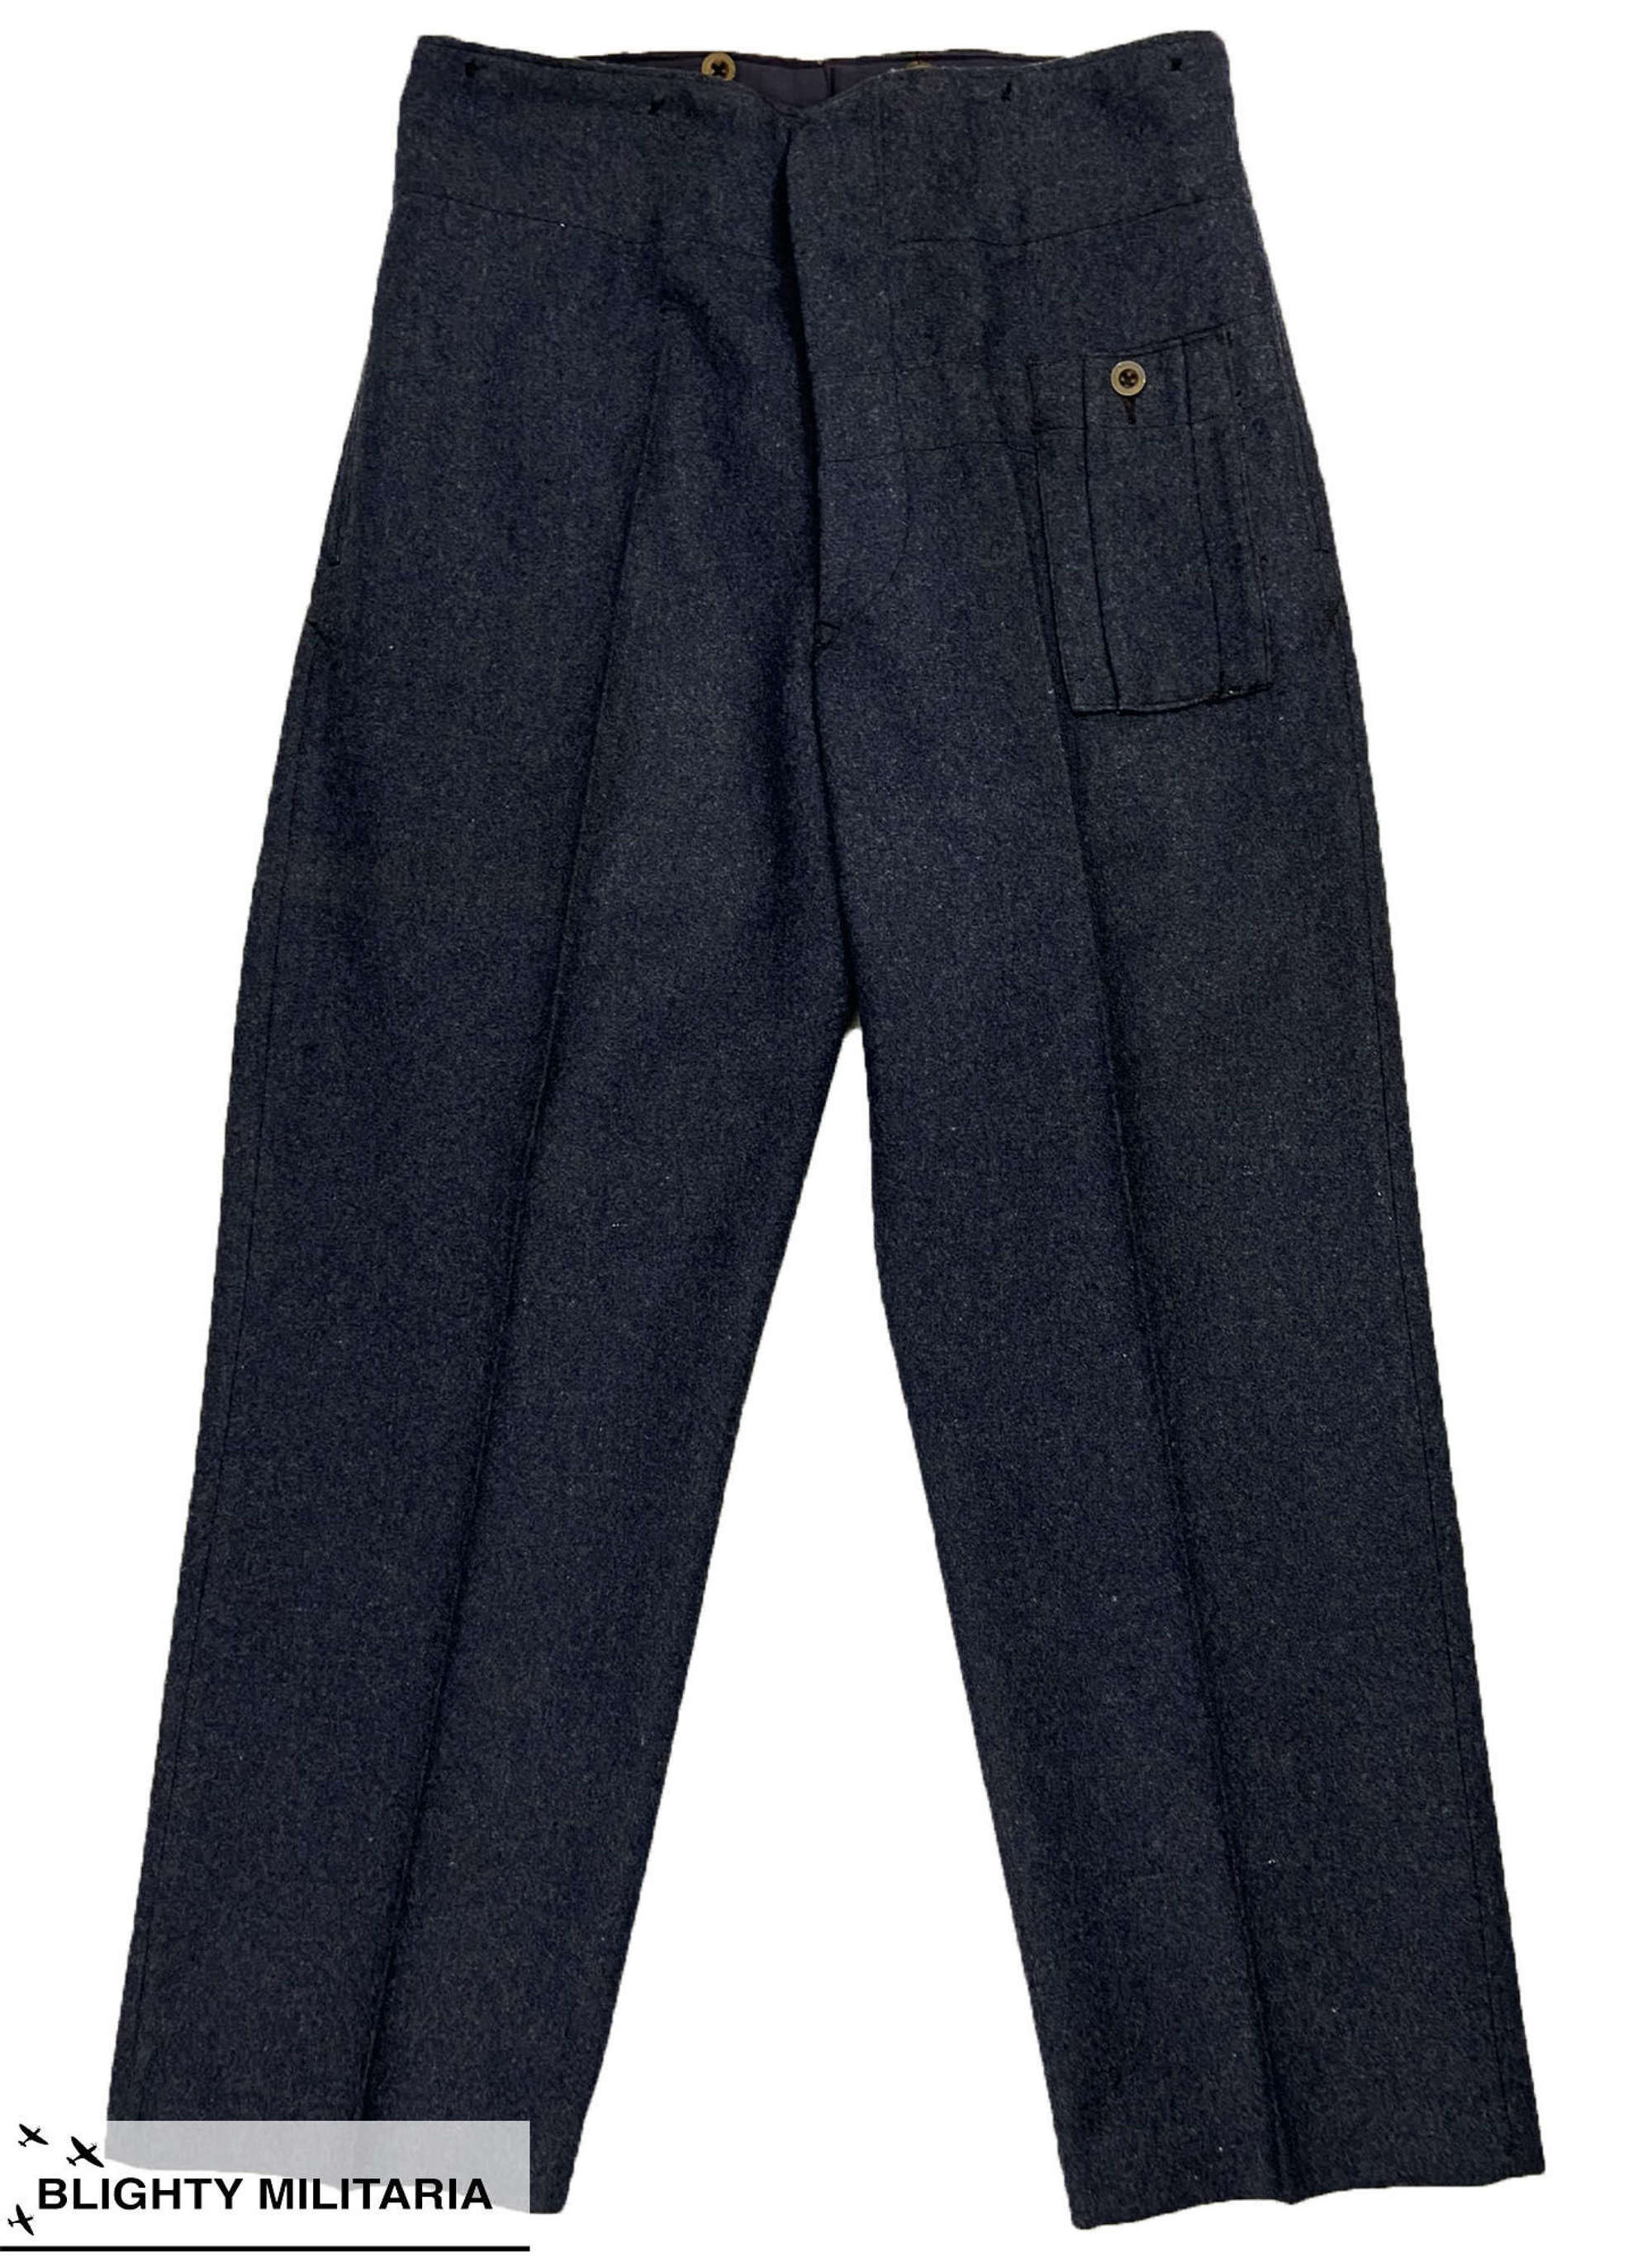 Original 1943 Dated RAF War Service Dress Trousers - Size 6